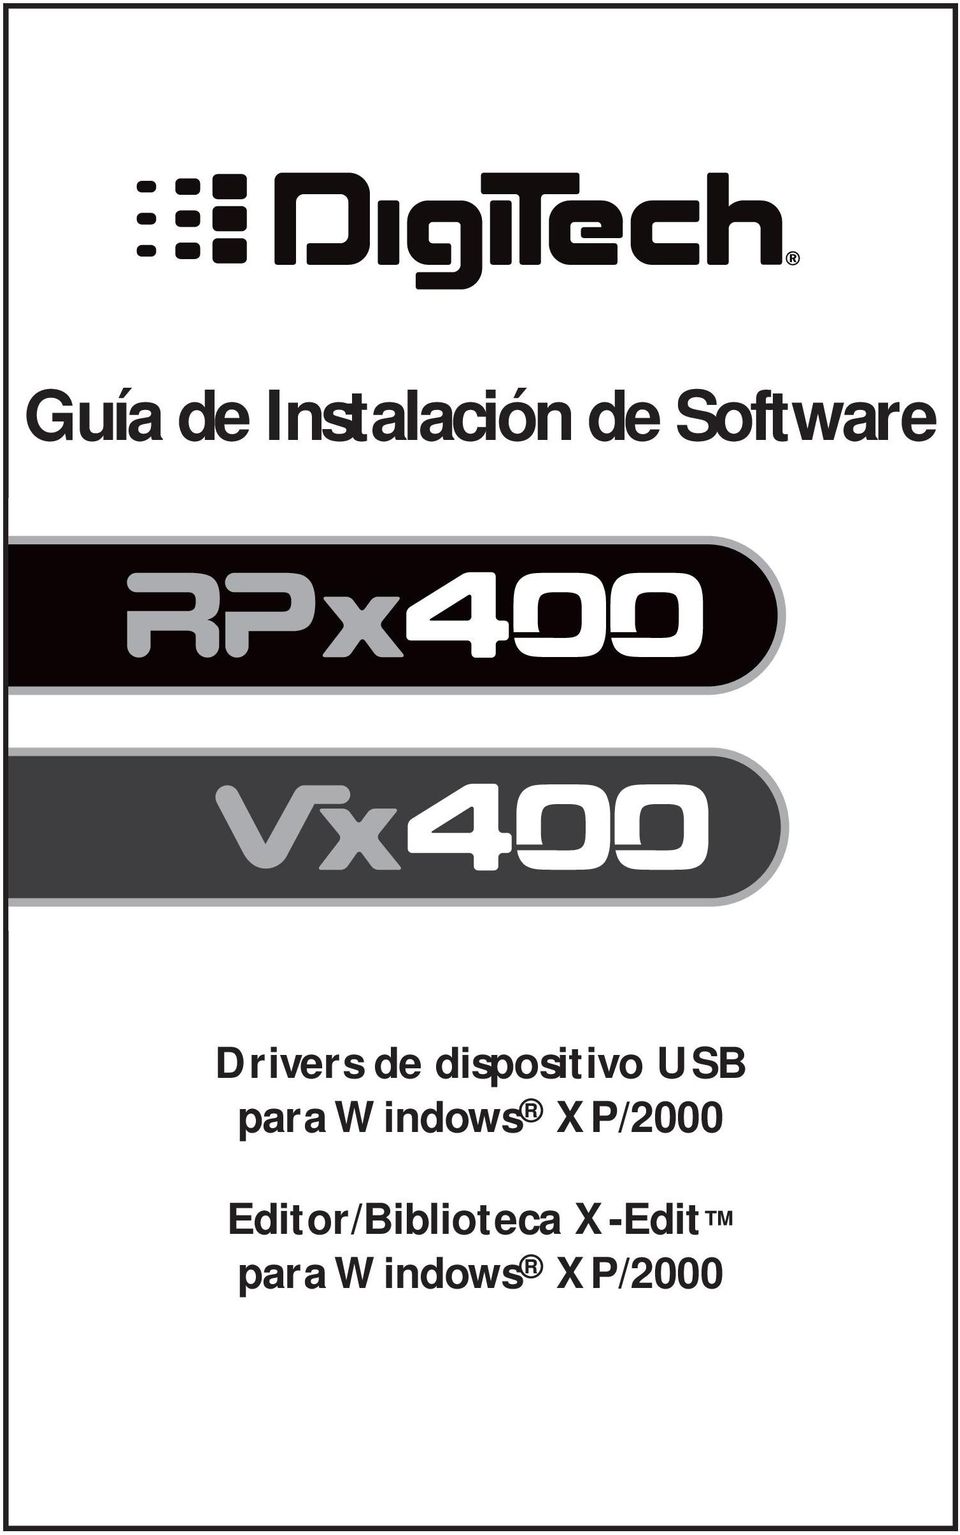 Windows XP/2000